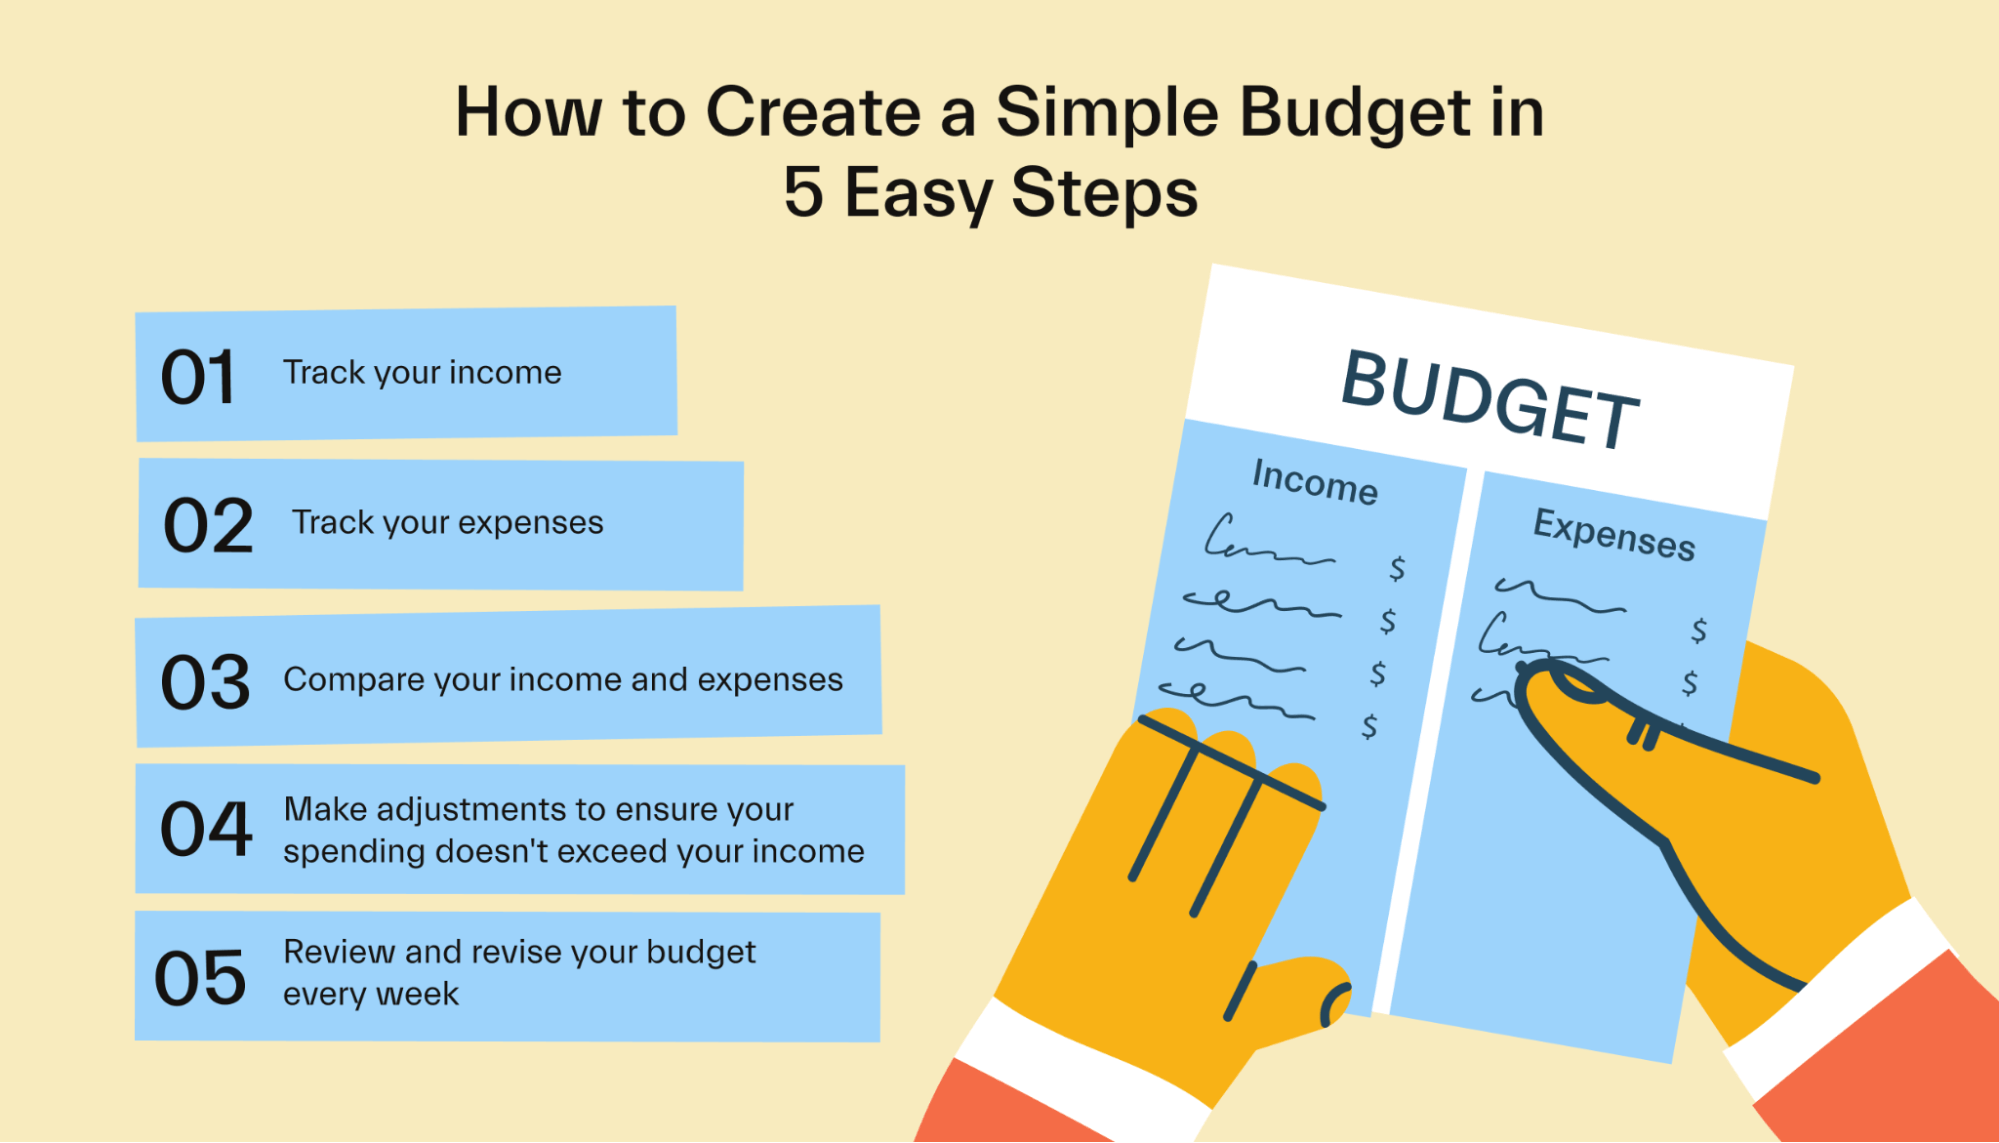 How to Create a Budget